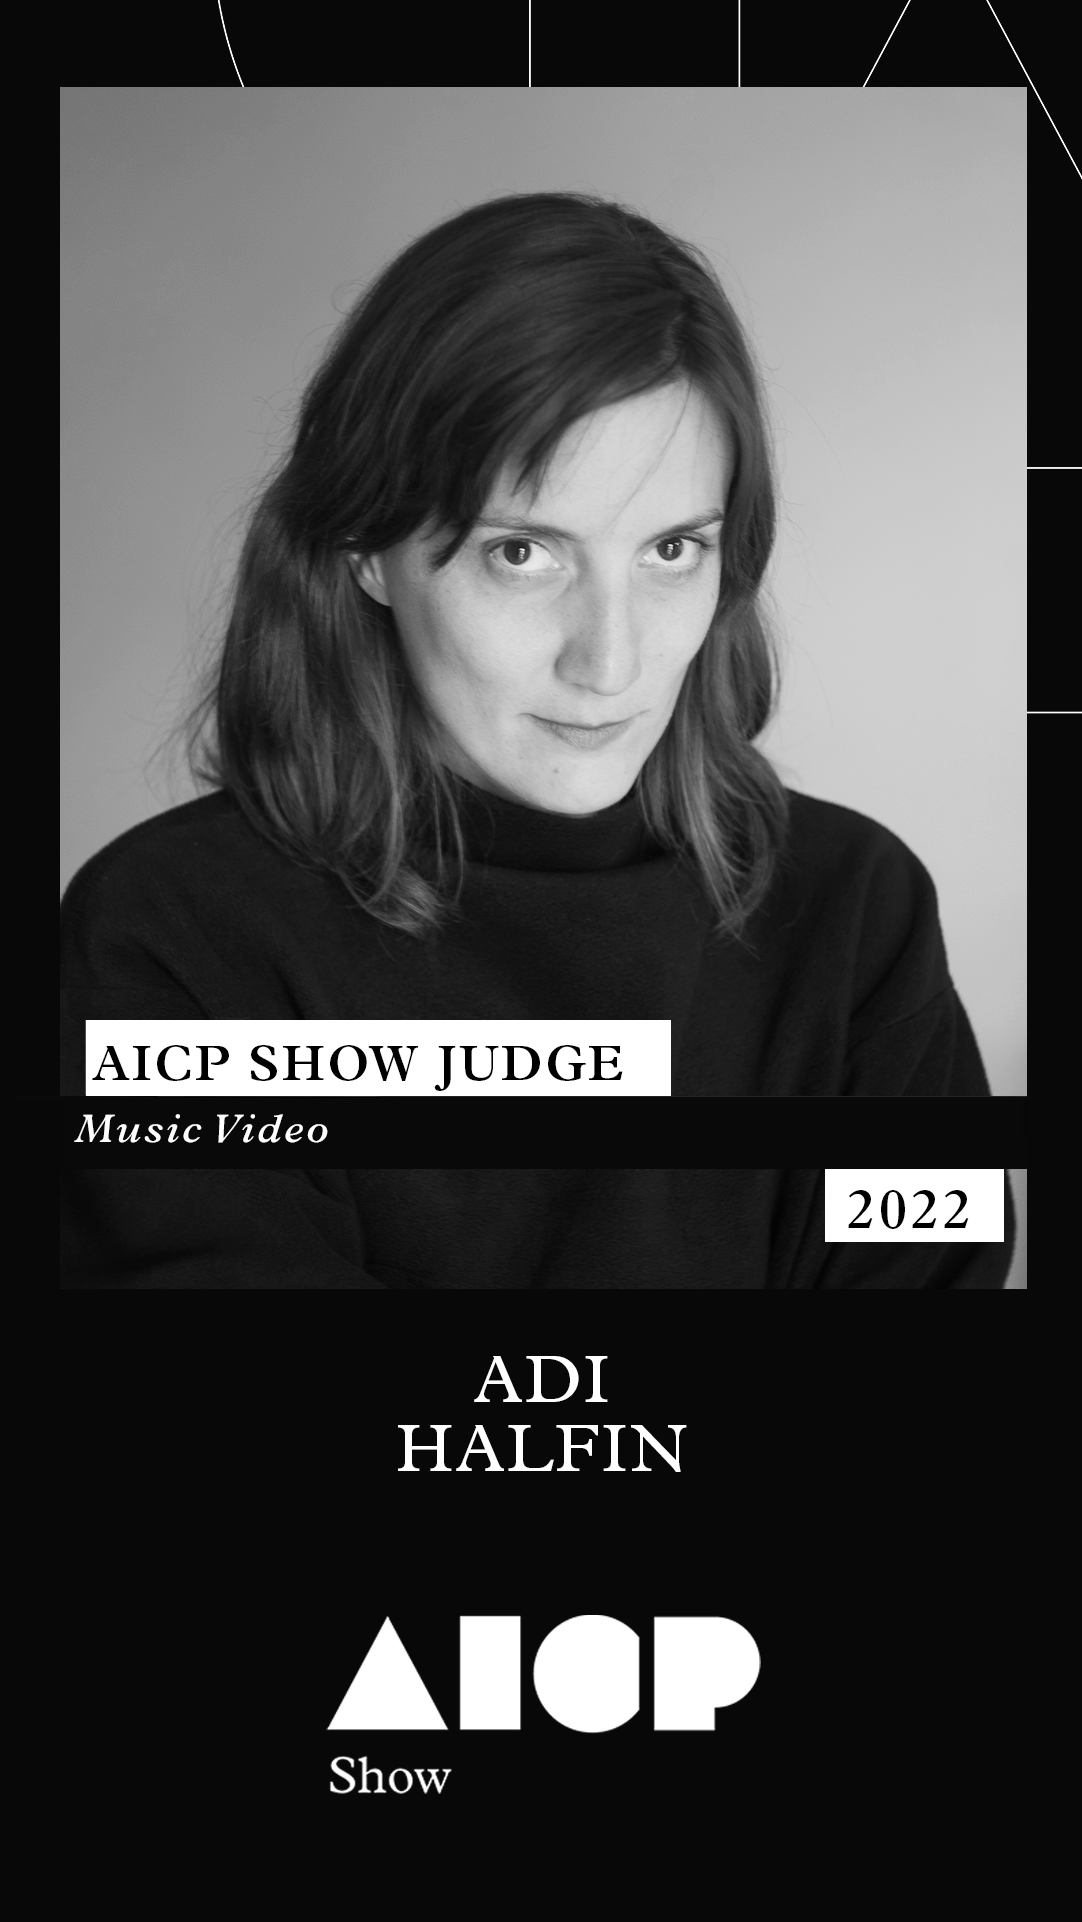 Adi Halfin joins the 2022 AICP Show jury committee